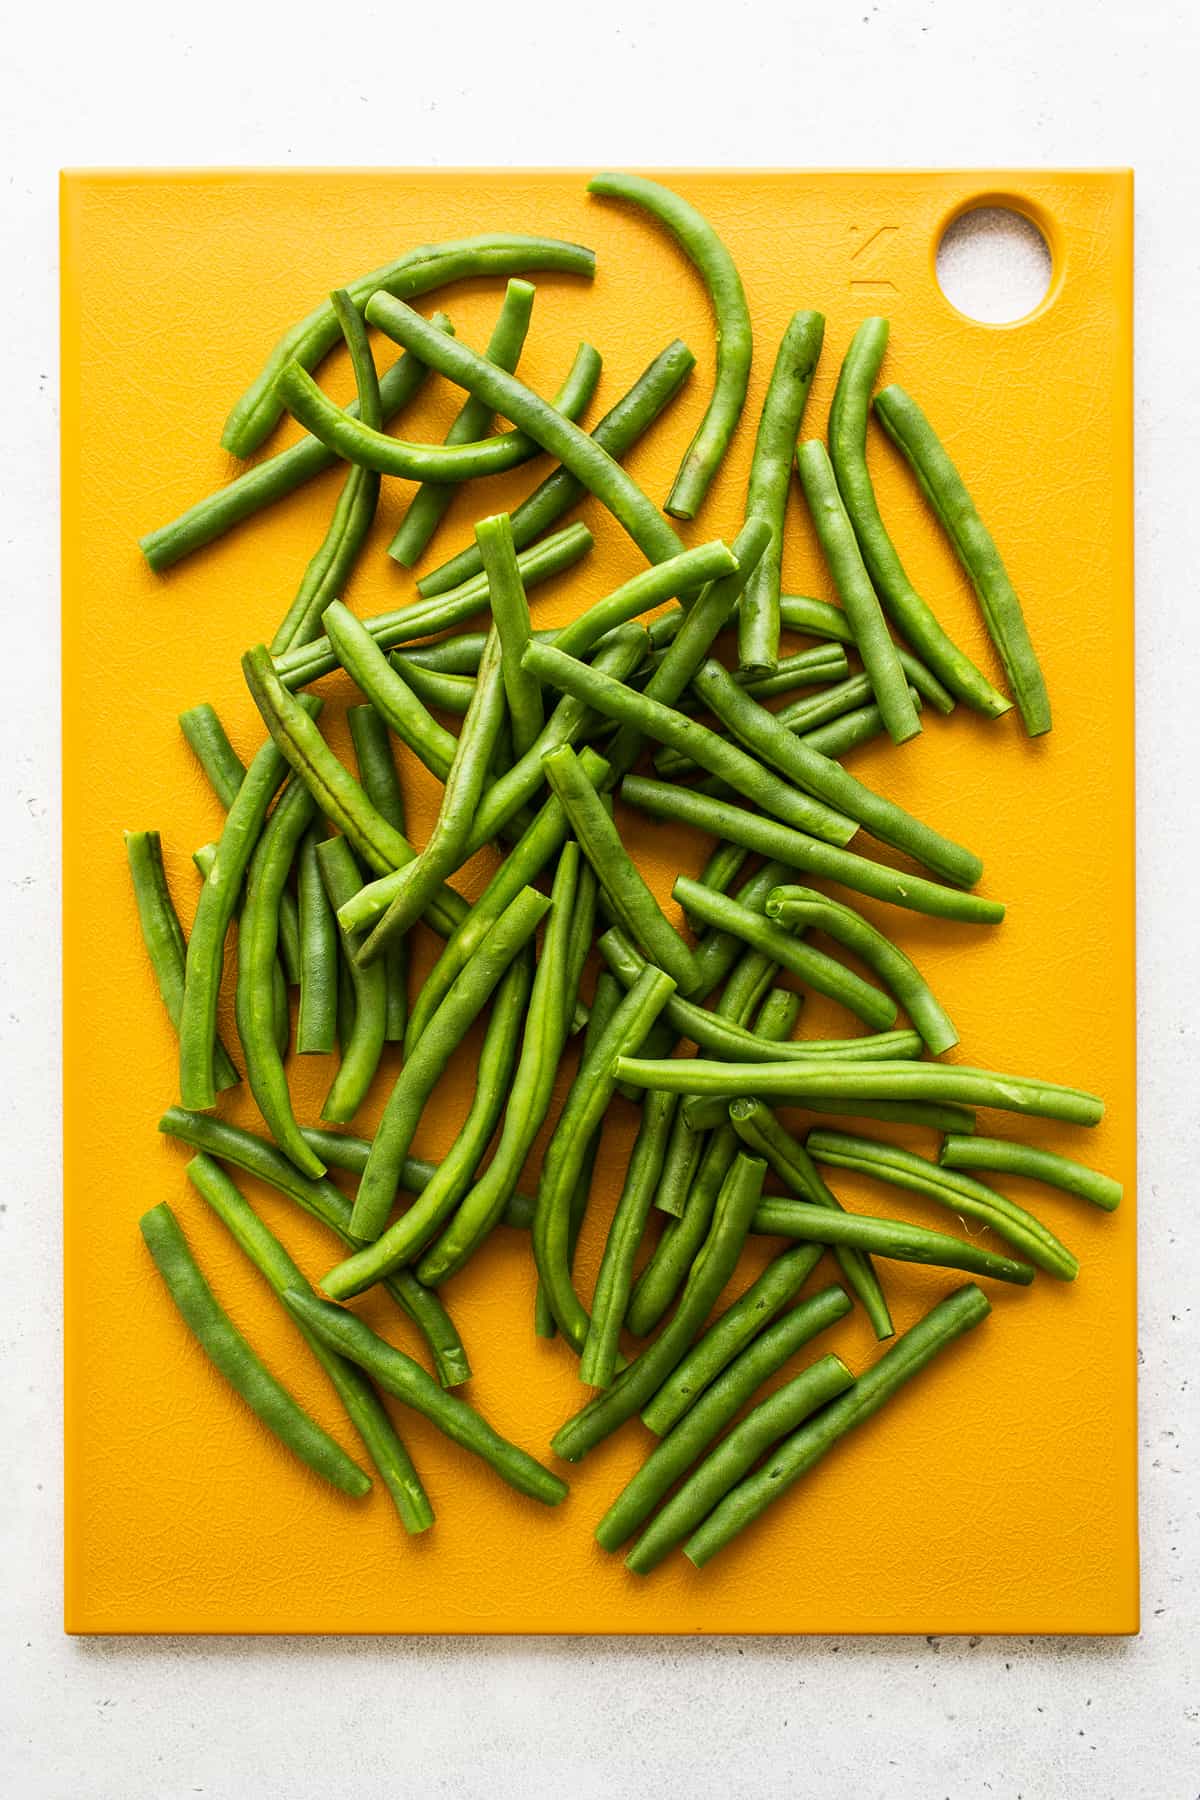 cut green beans on cutting board